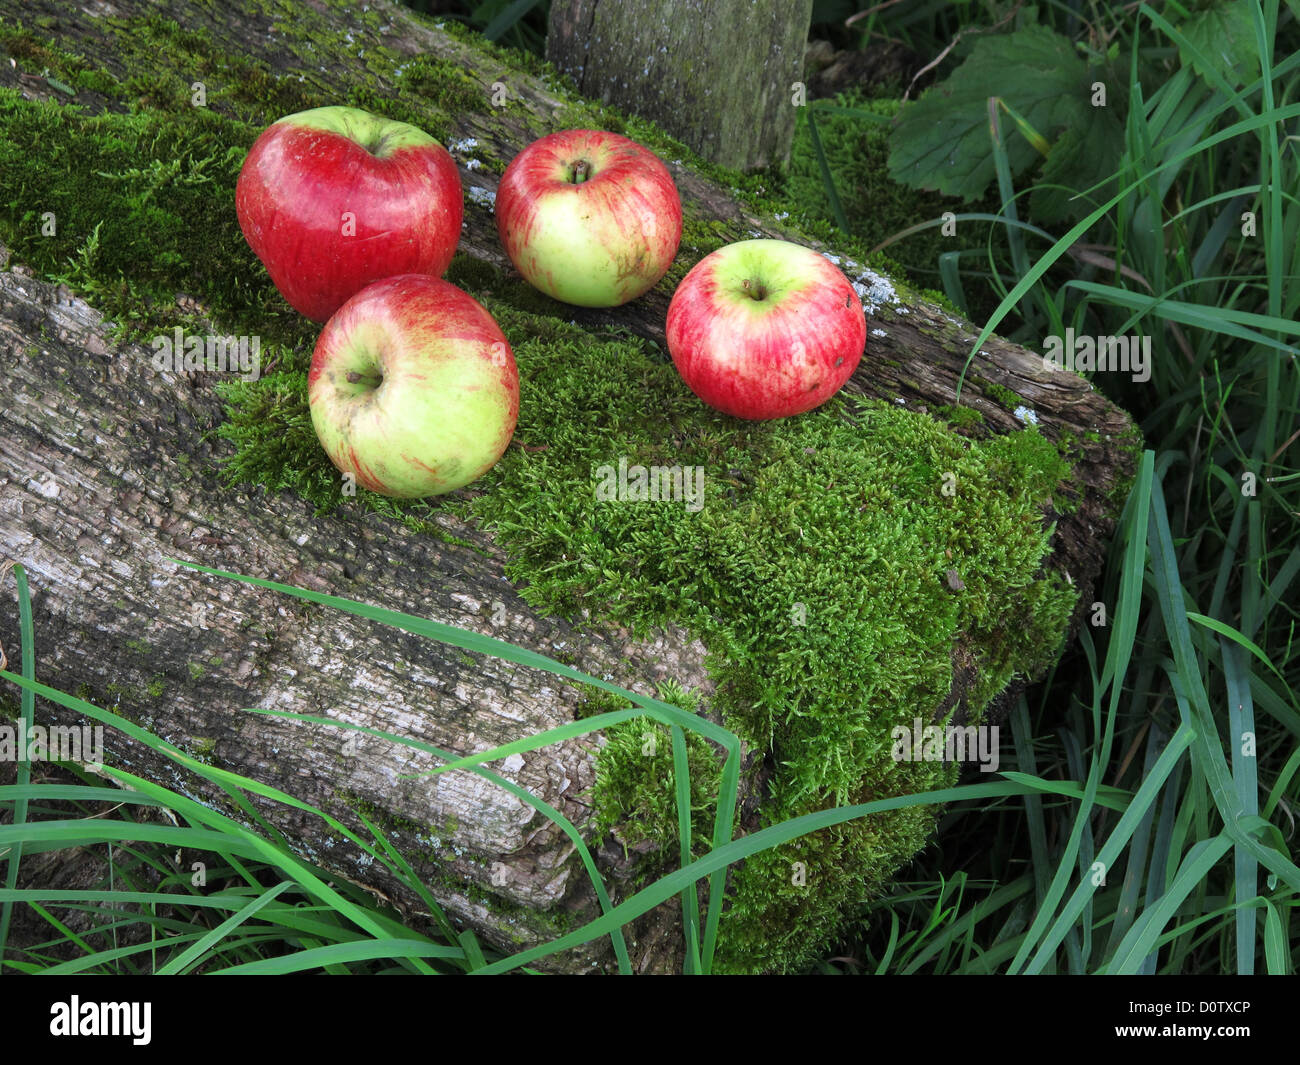 Tree, tree stump, lie, rotten, ramshackle, humid, moist, moss, apple, four, arrangement Stock Photo